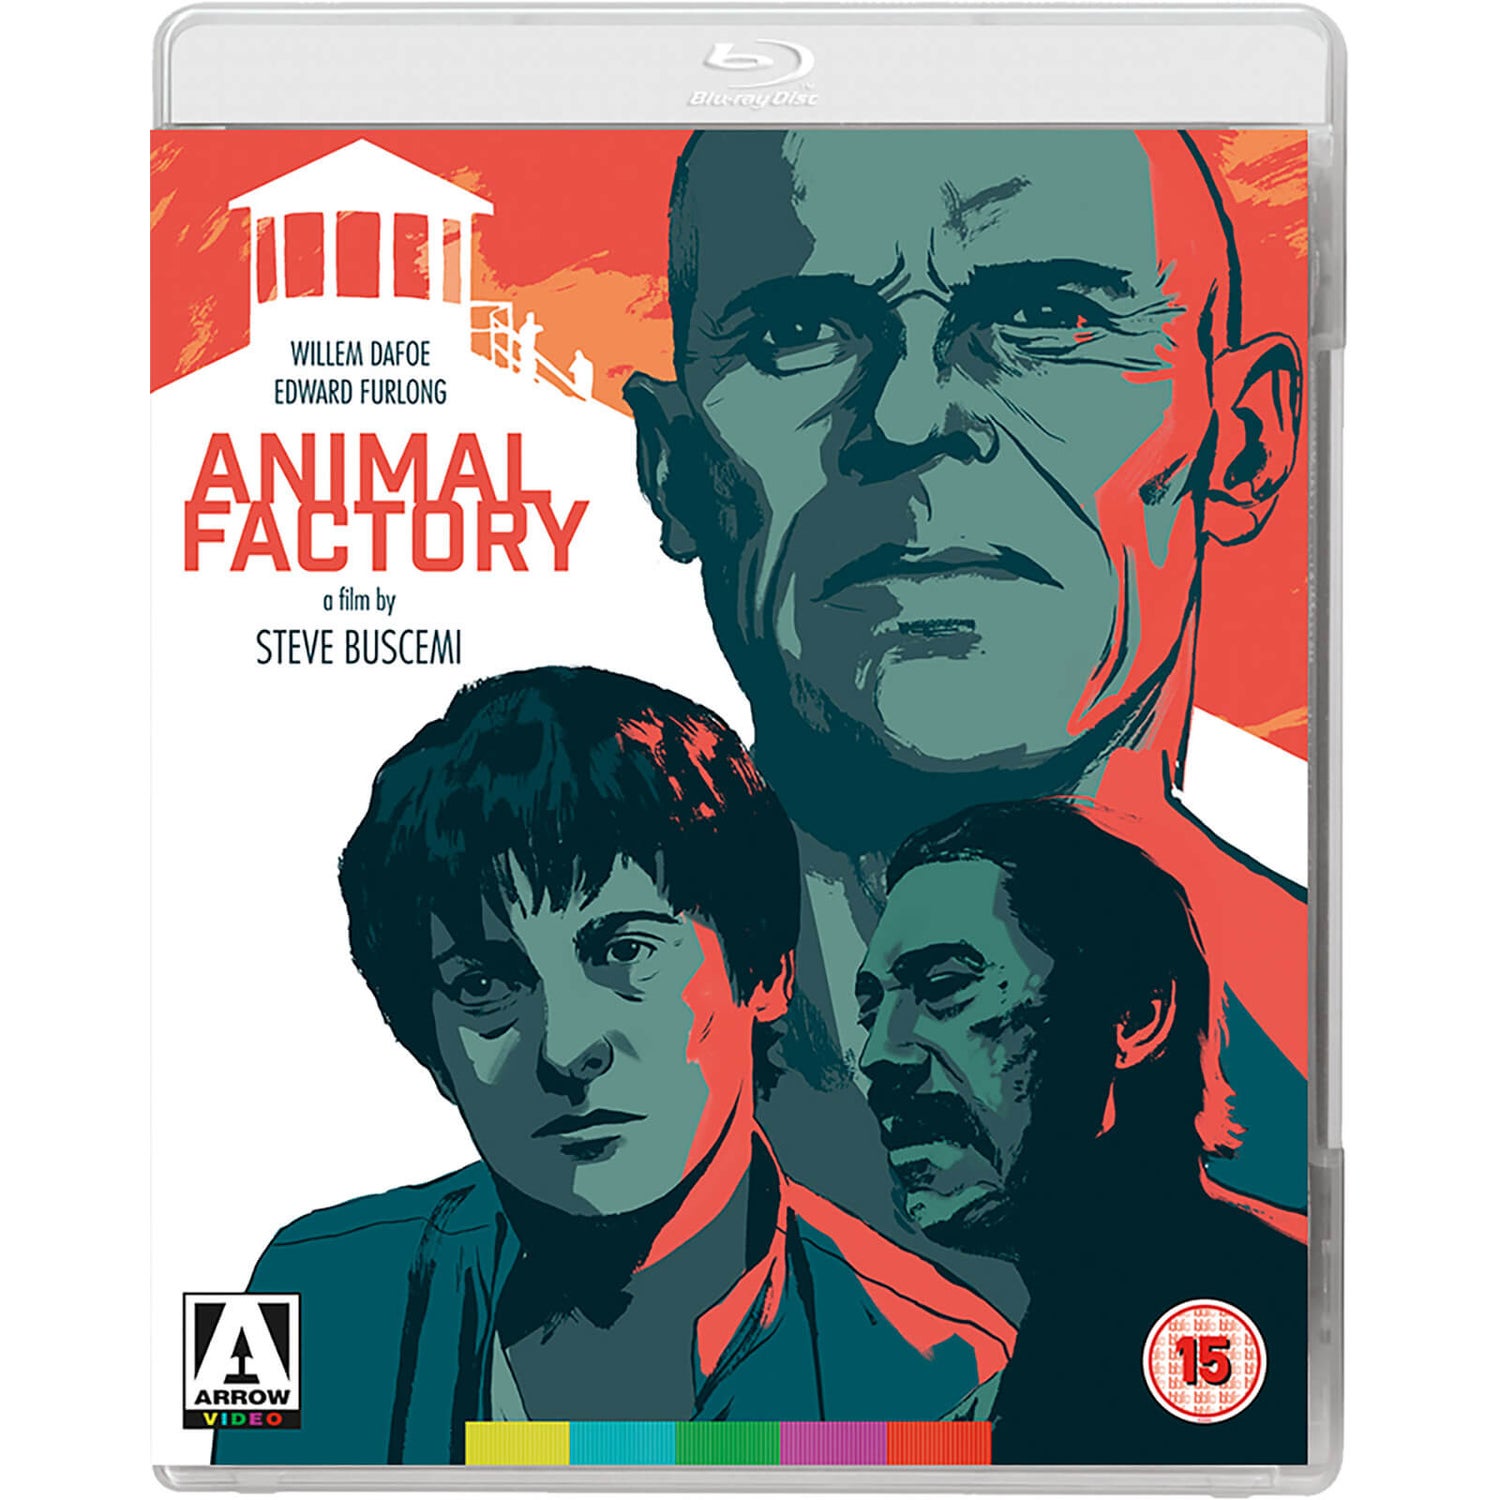 Animal Factory Blu-ray - Arrow Films UK